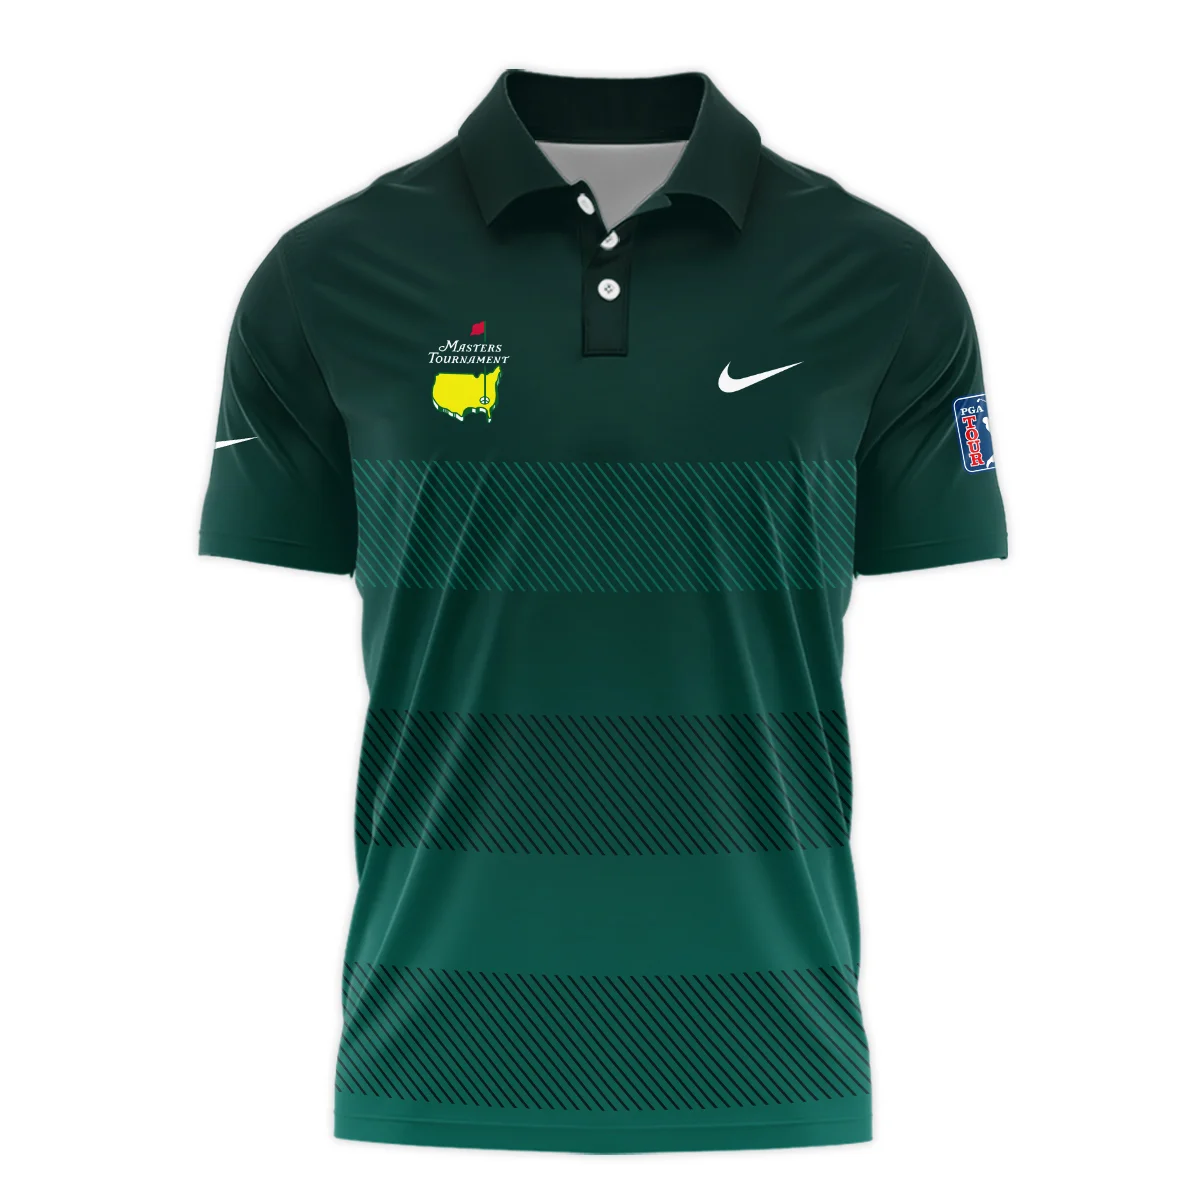 Nike Masters Tournament Dark Green Gradient Stripes Pattern Golf Sport Bomber Jacket Style Classic Bomber Jacket